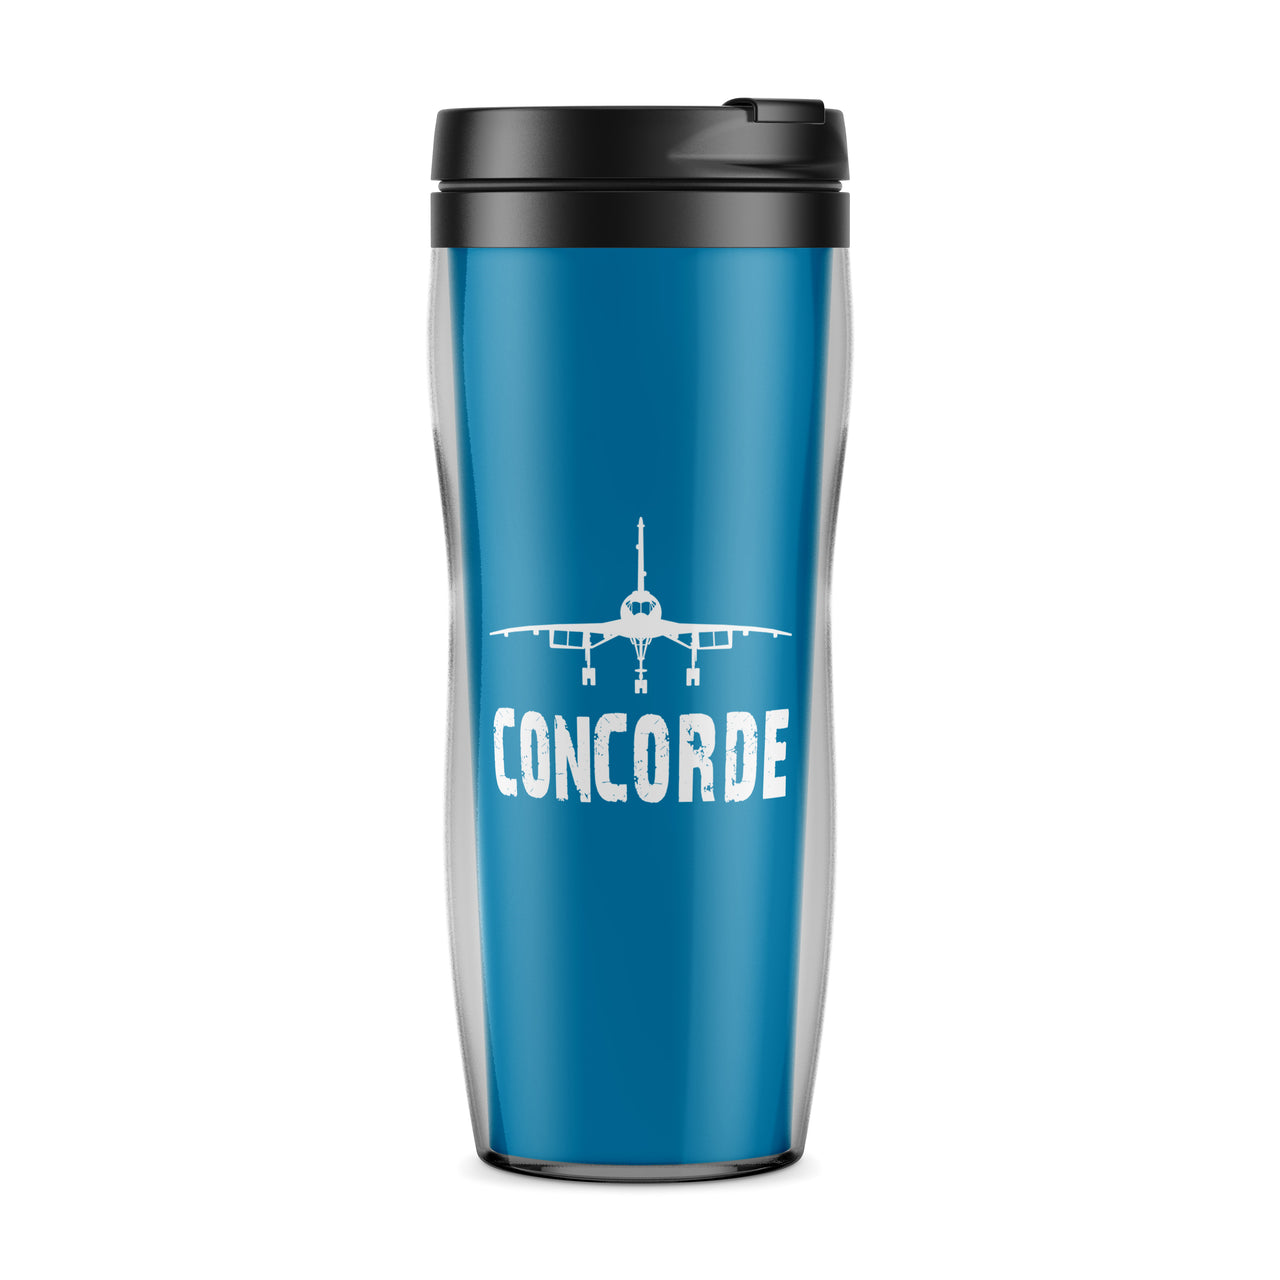 Concorde & Plane Designed Travel Mugs